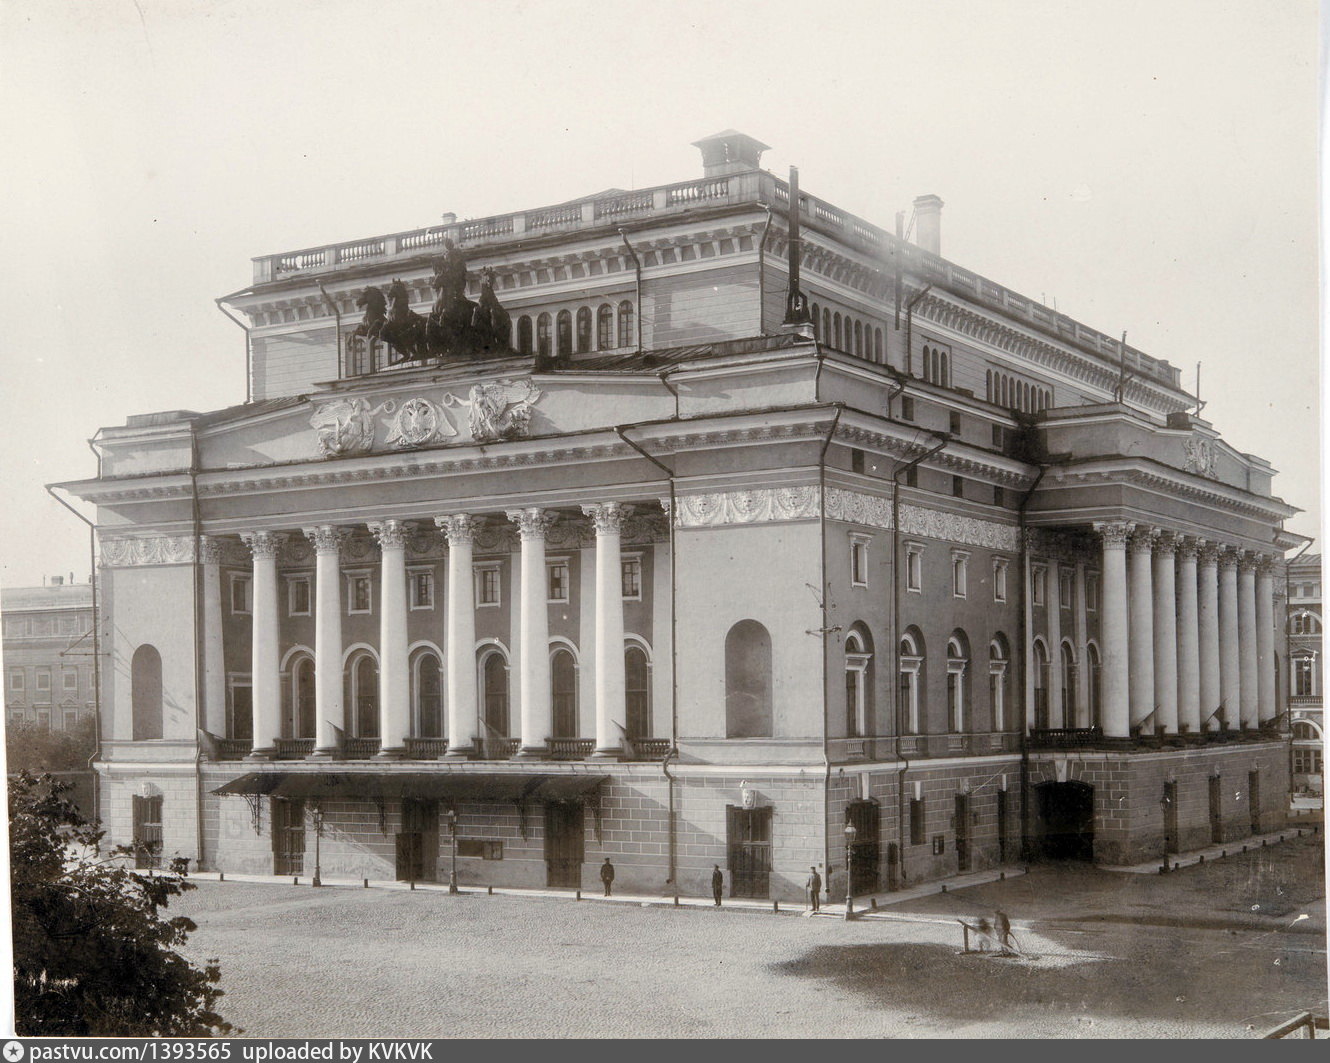 Александринский театр. Петербург (1828-1832). Арх. к.и. Росси